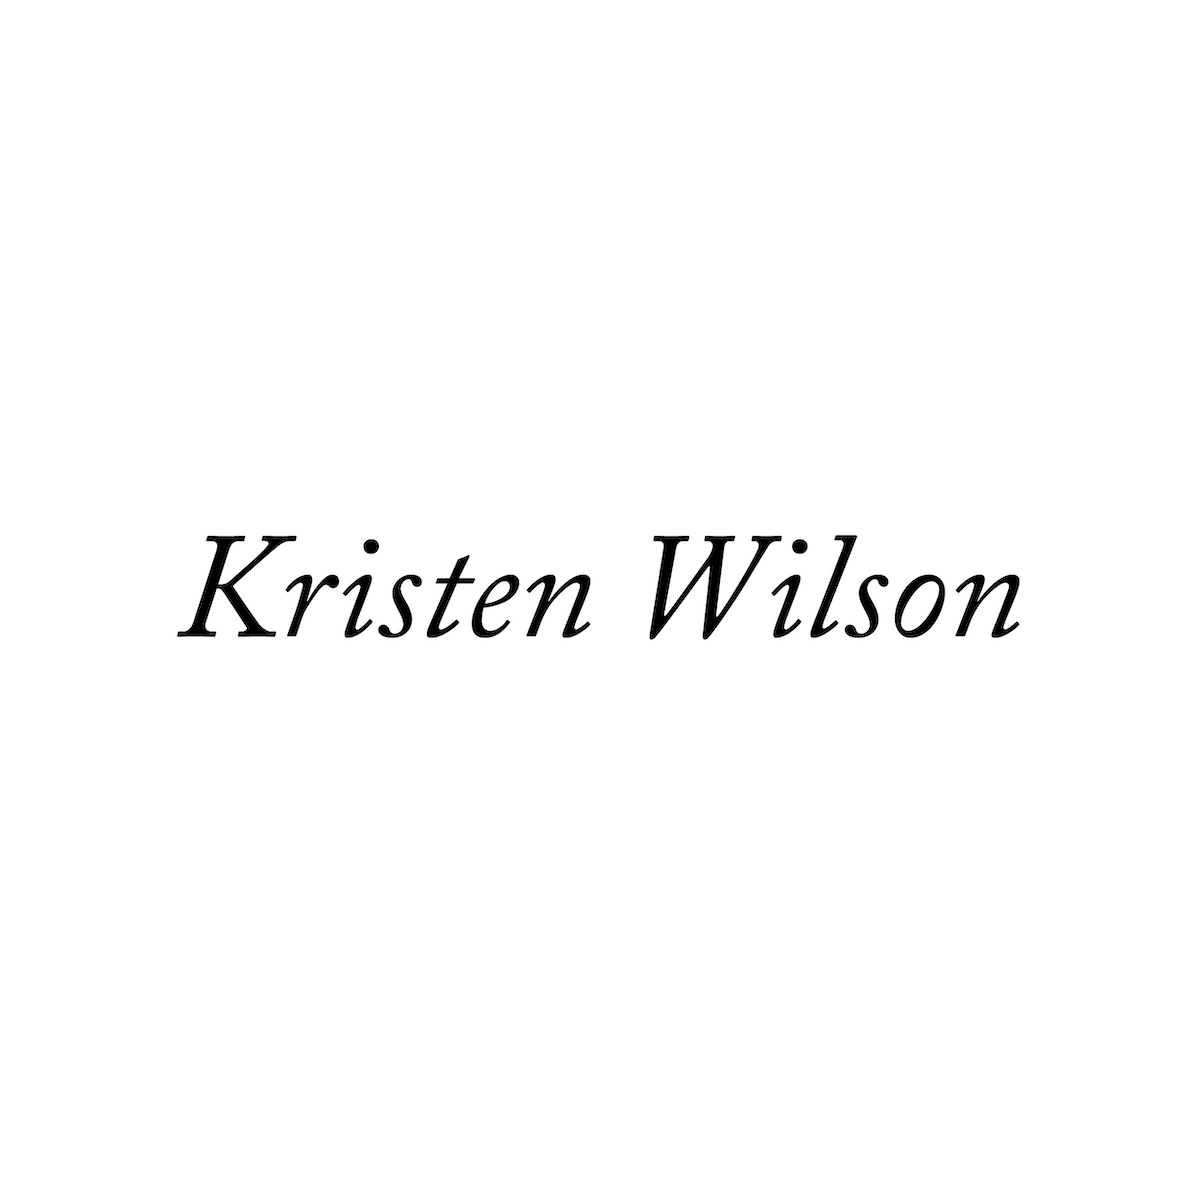 Kristen Wilson